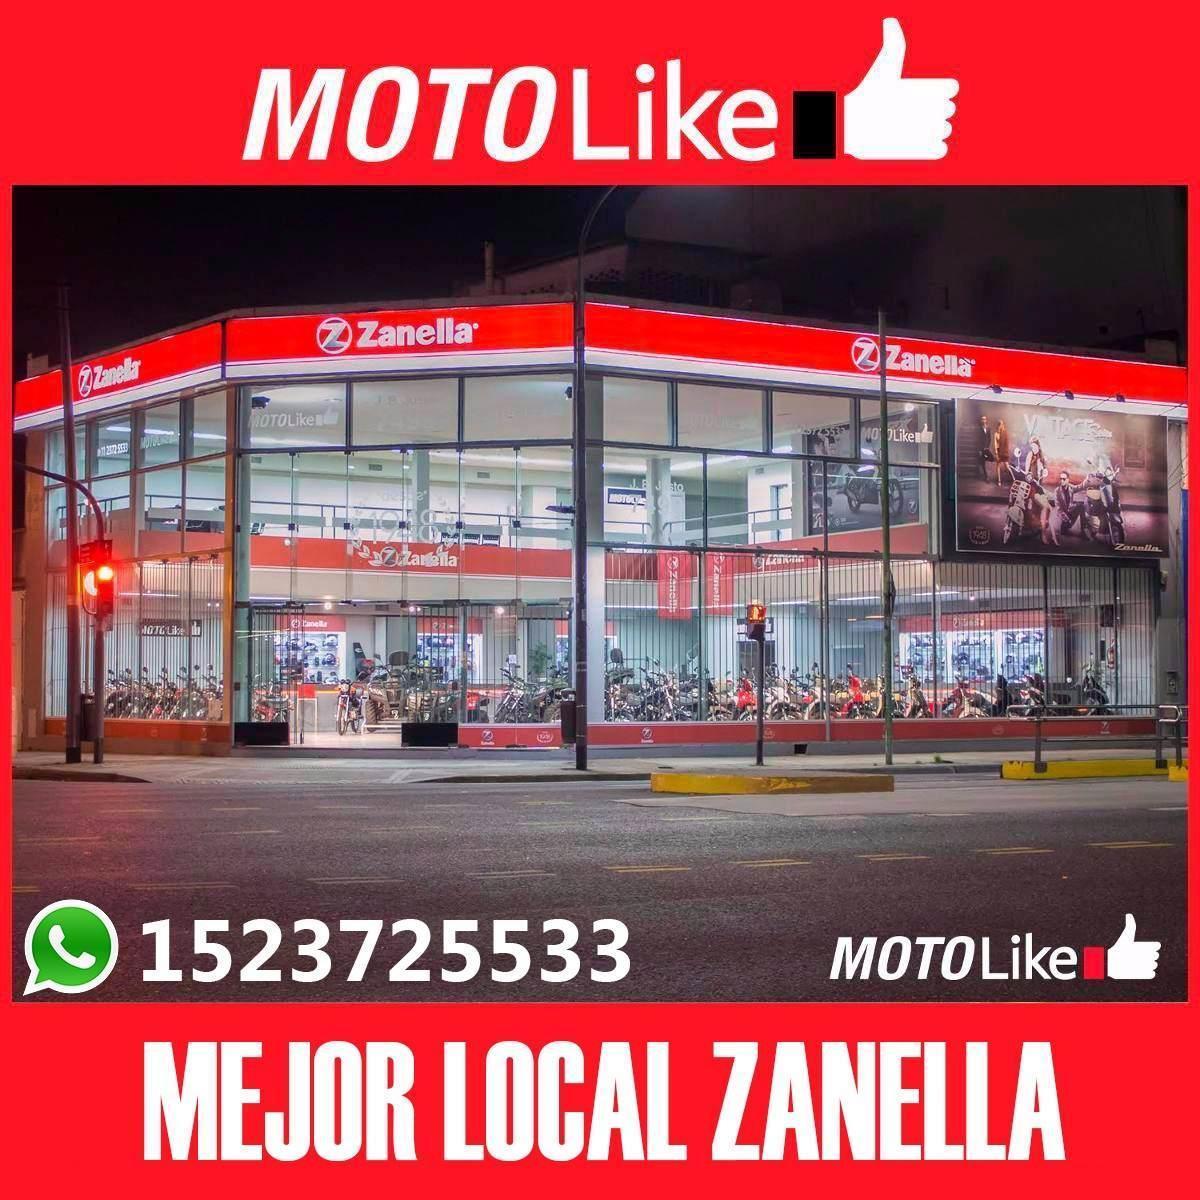 Zanella Zr 250 Lt 0km Moto Like Oferta